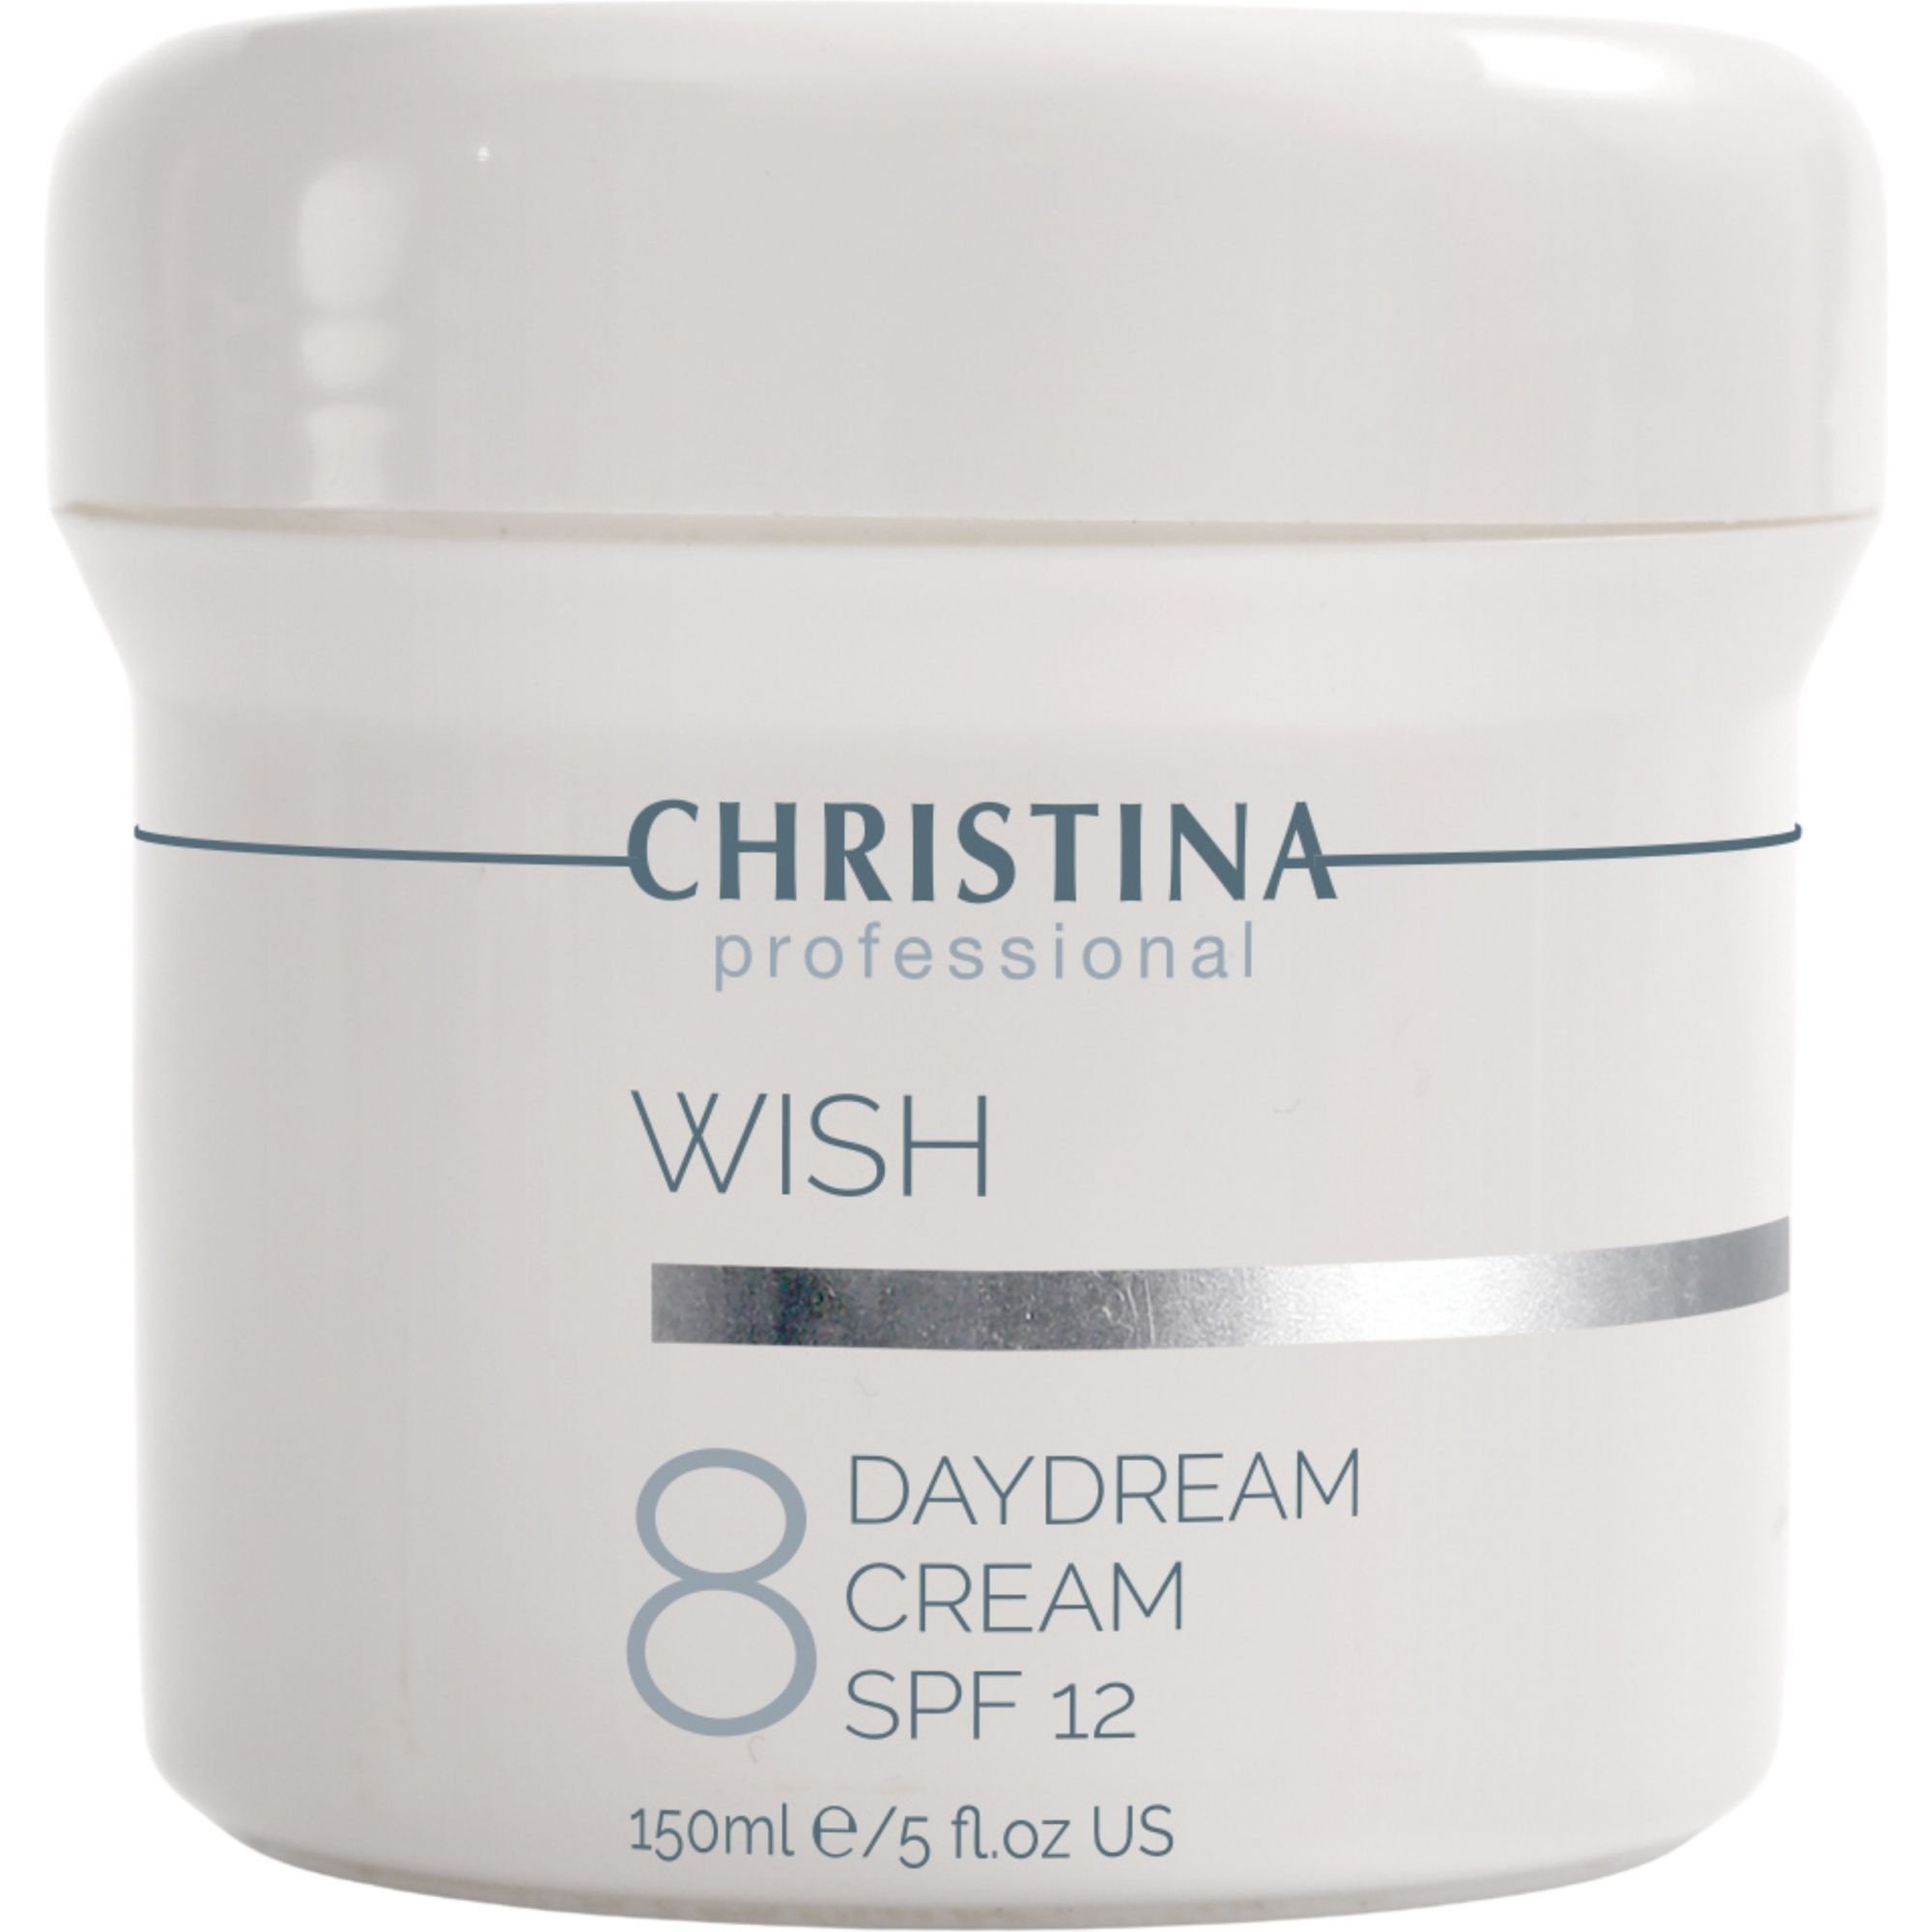 Денний крем Christina Wish Daydream Cream SPF 12 150 мл - фото 1